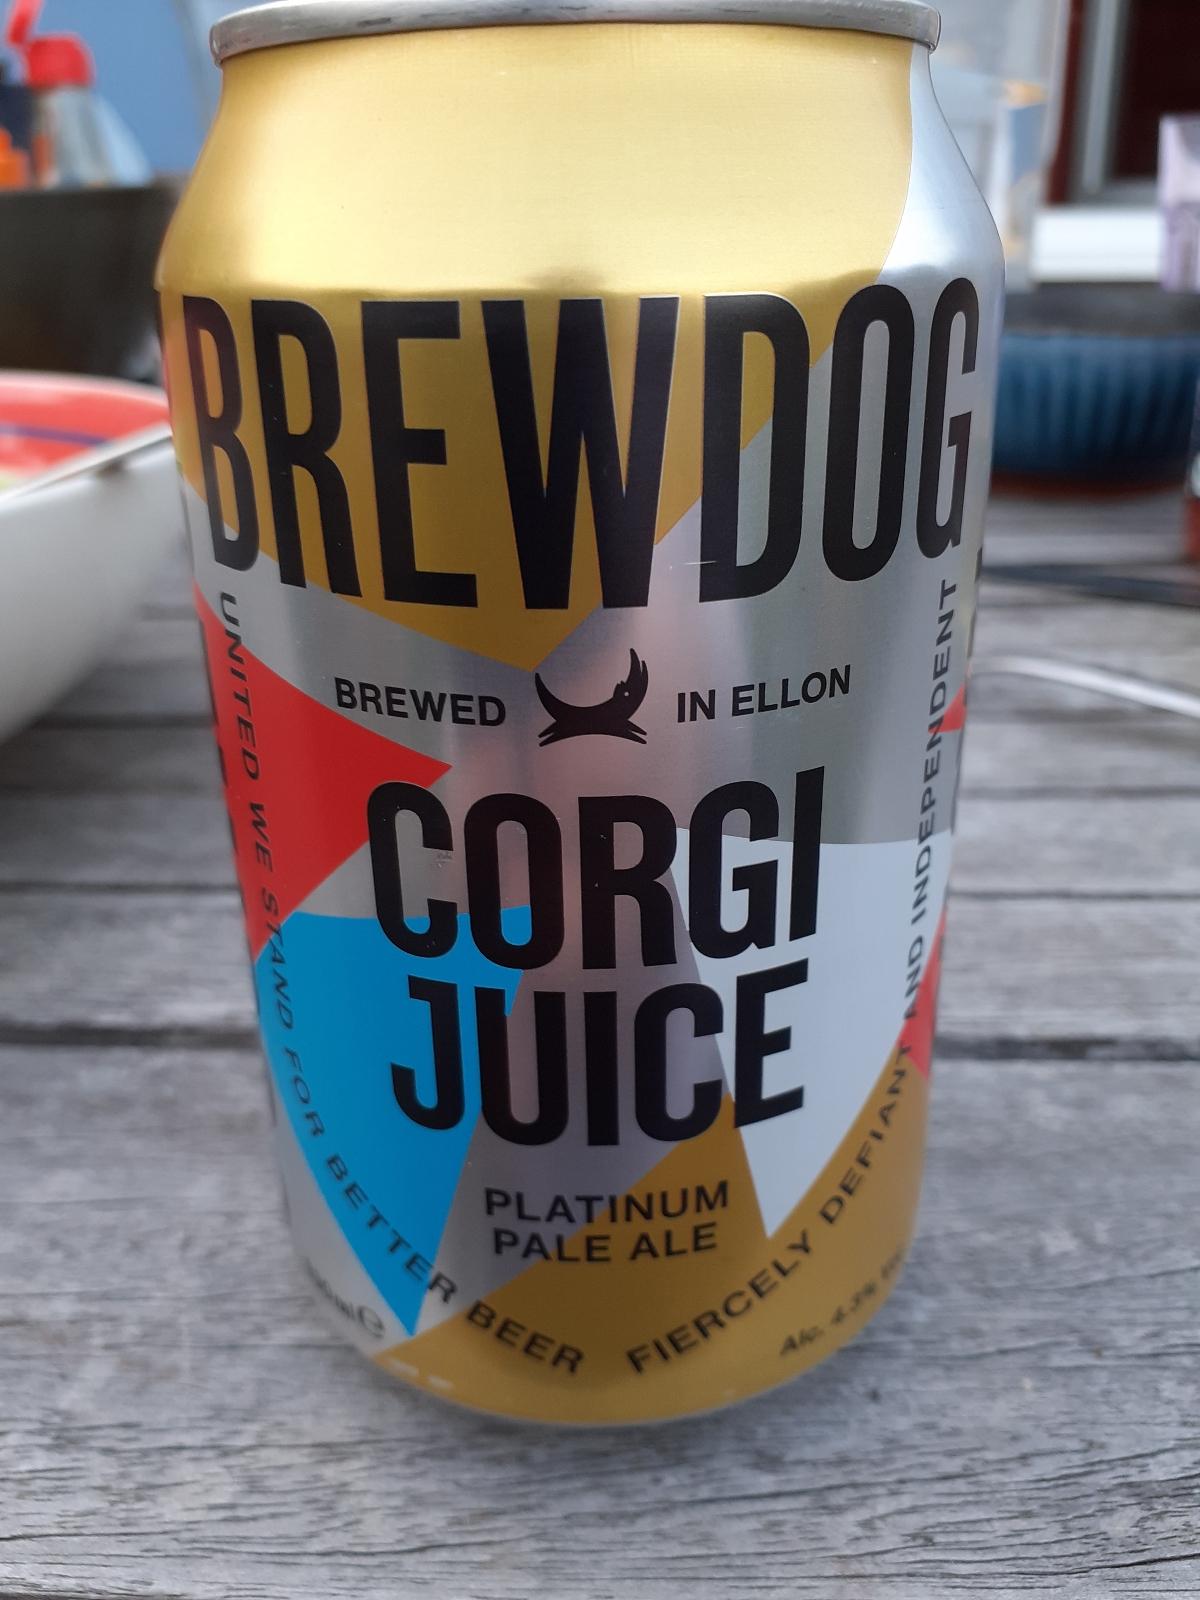 Corgi Juice